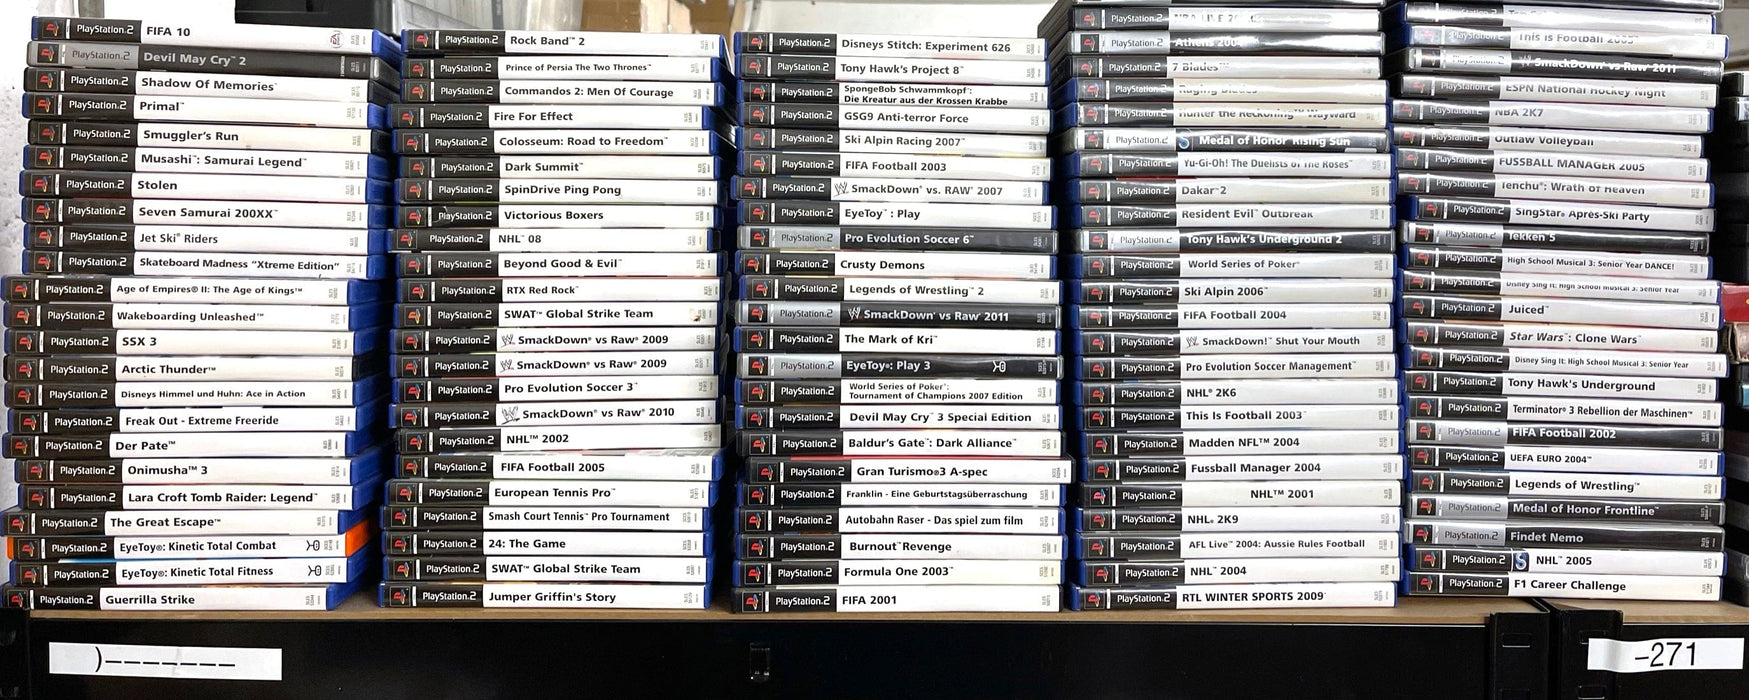 Glaciergames PlayStation 2 Game Xena - Die Kriegerprinzessin PlayStation 2 (Nr.819)